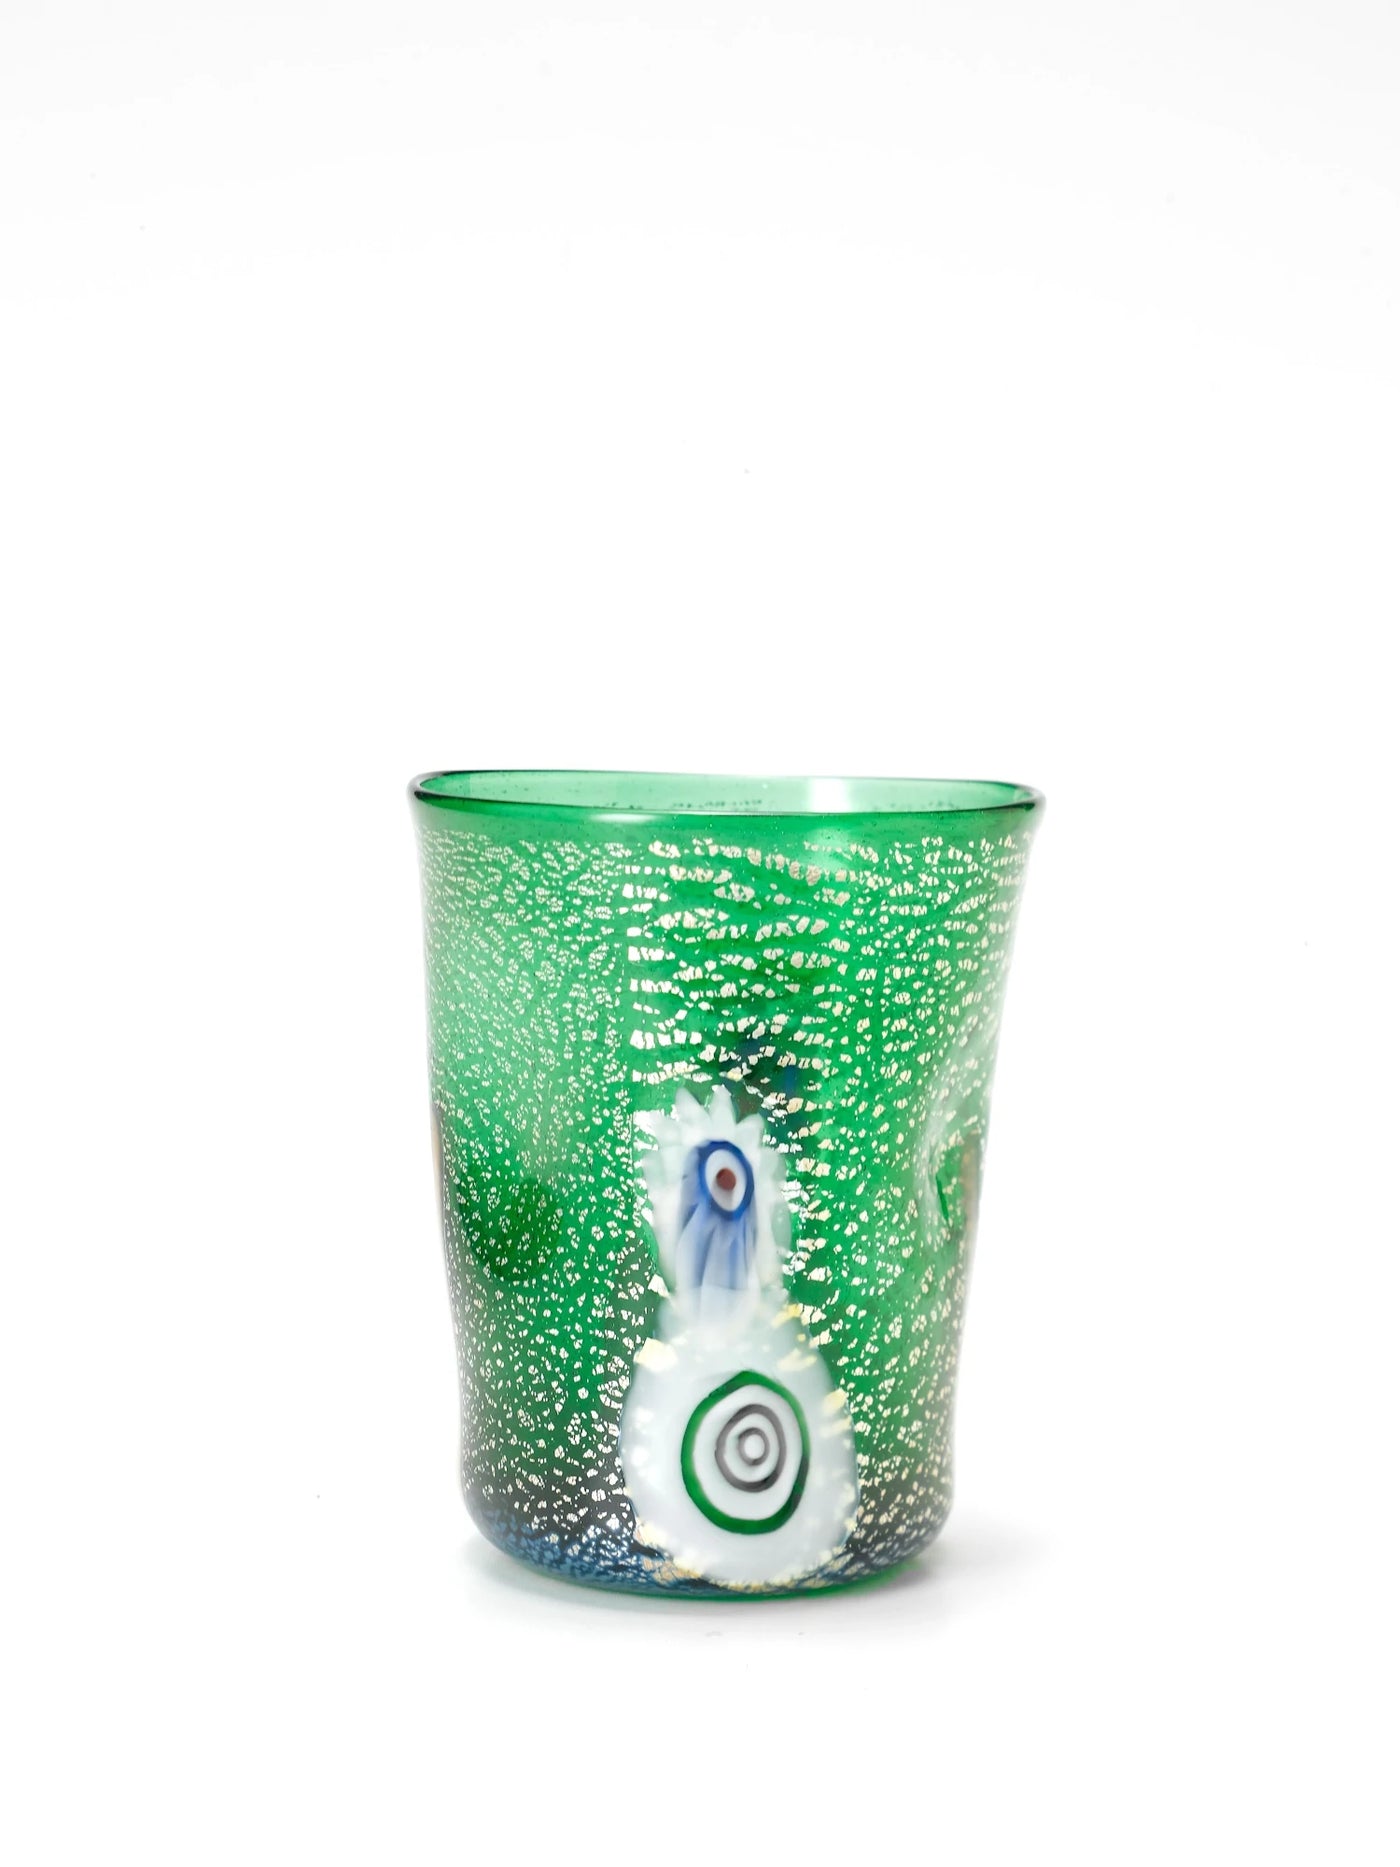 Murano Glass in Green